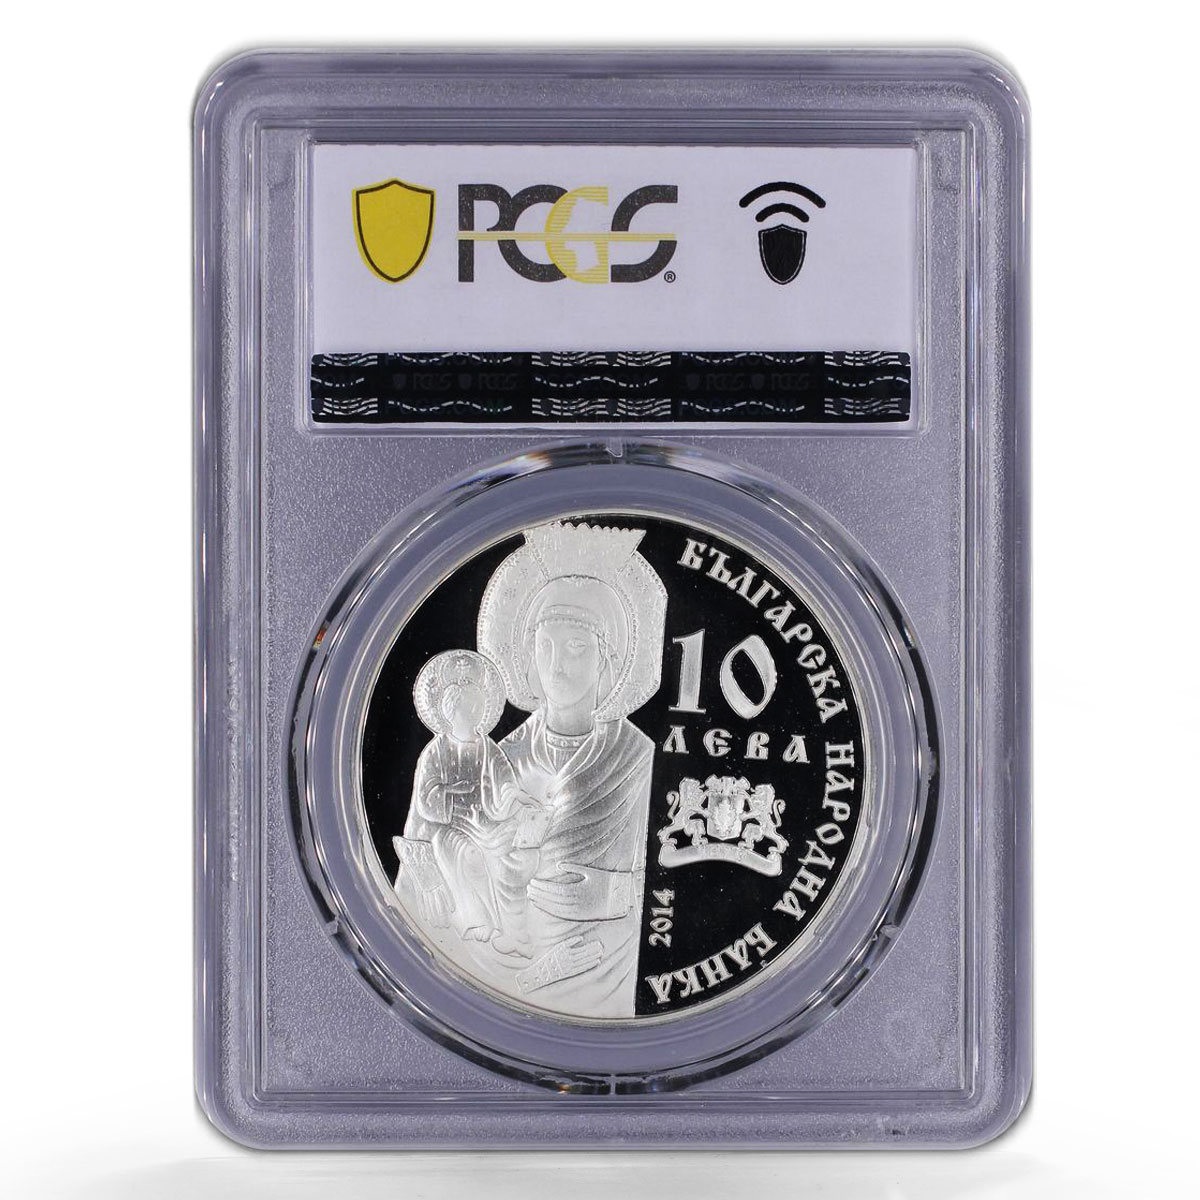 Bulgaria 10 leva Troyan Monastery Church Virgin Mary PR68 PCGS silver coin 2014